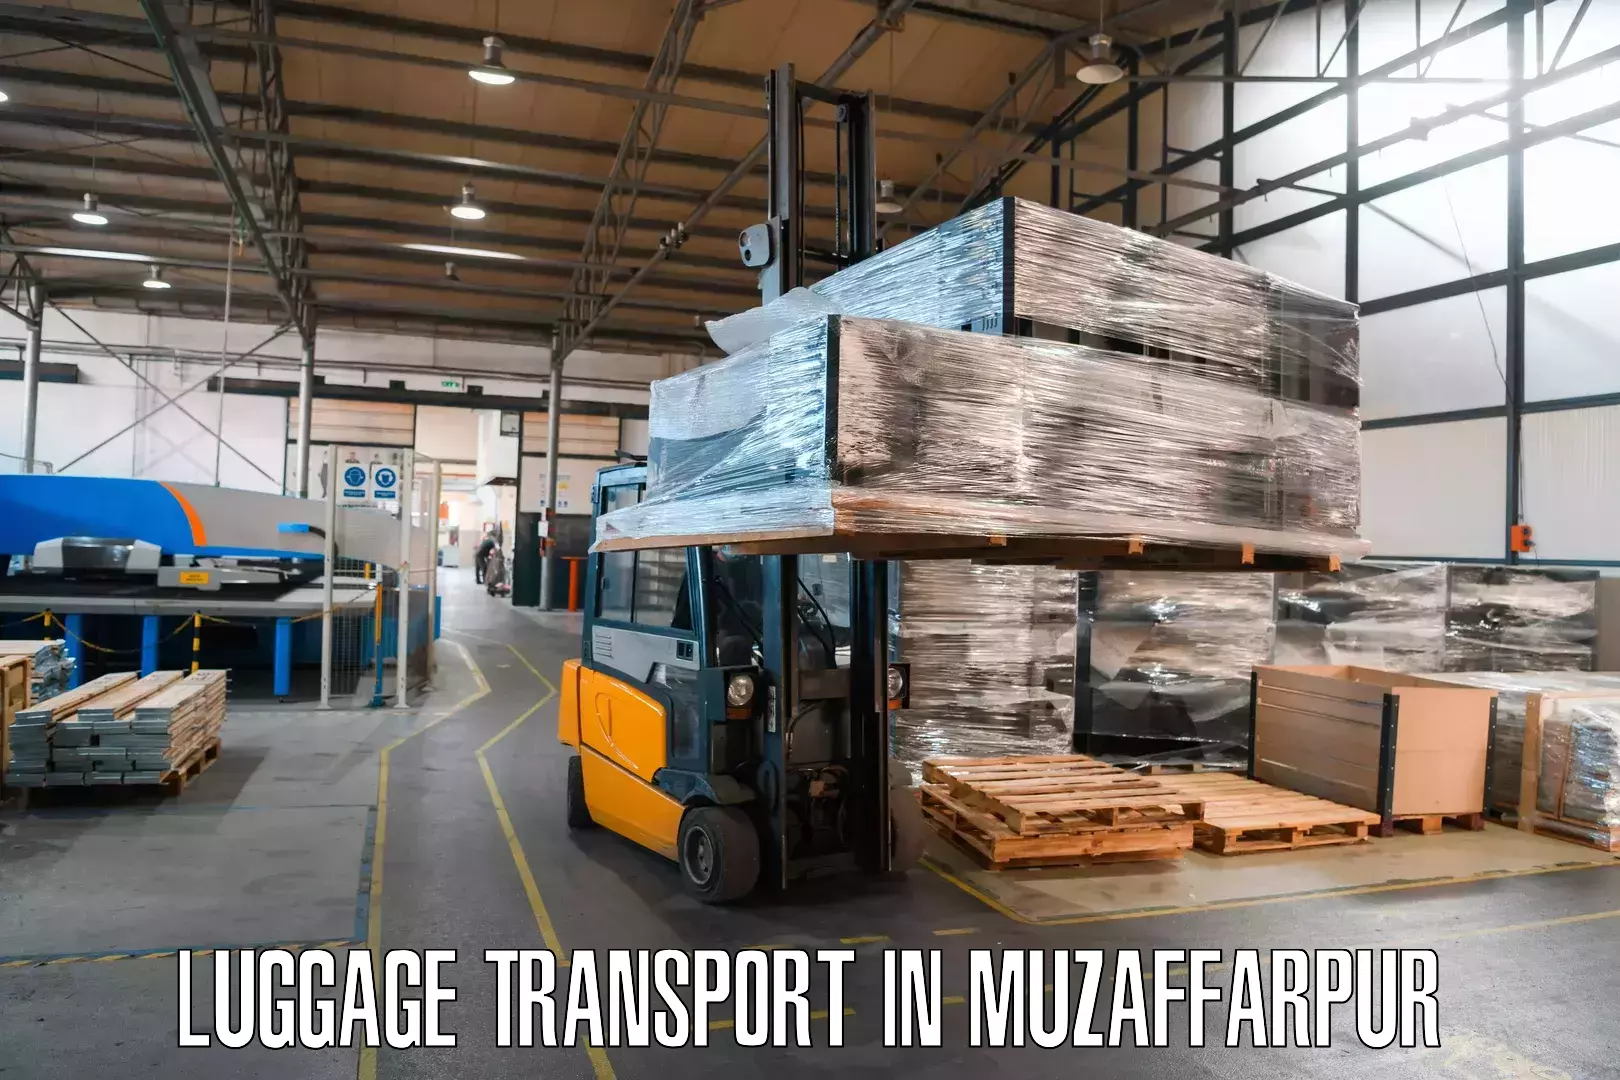 Luggage transport consultancy in Muzaffarpur